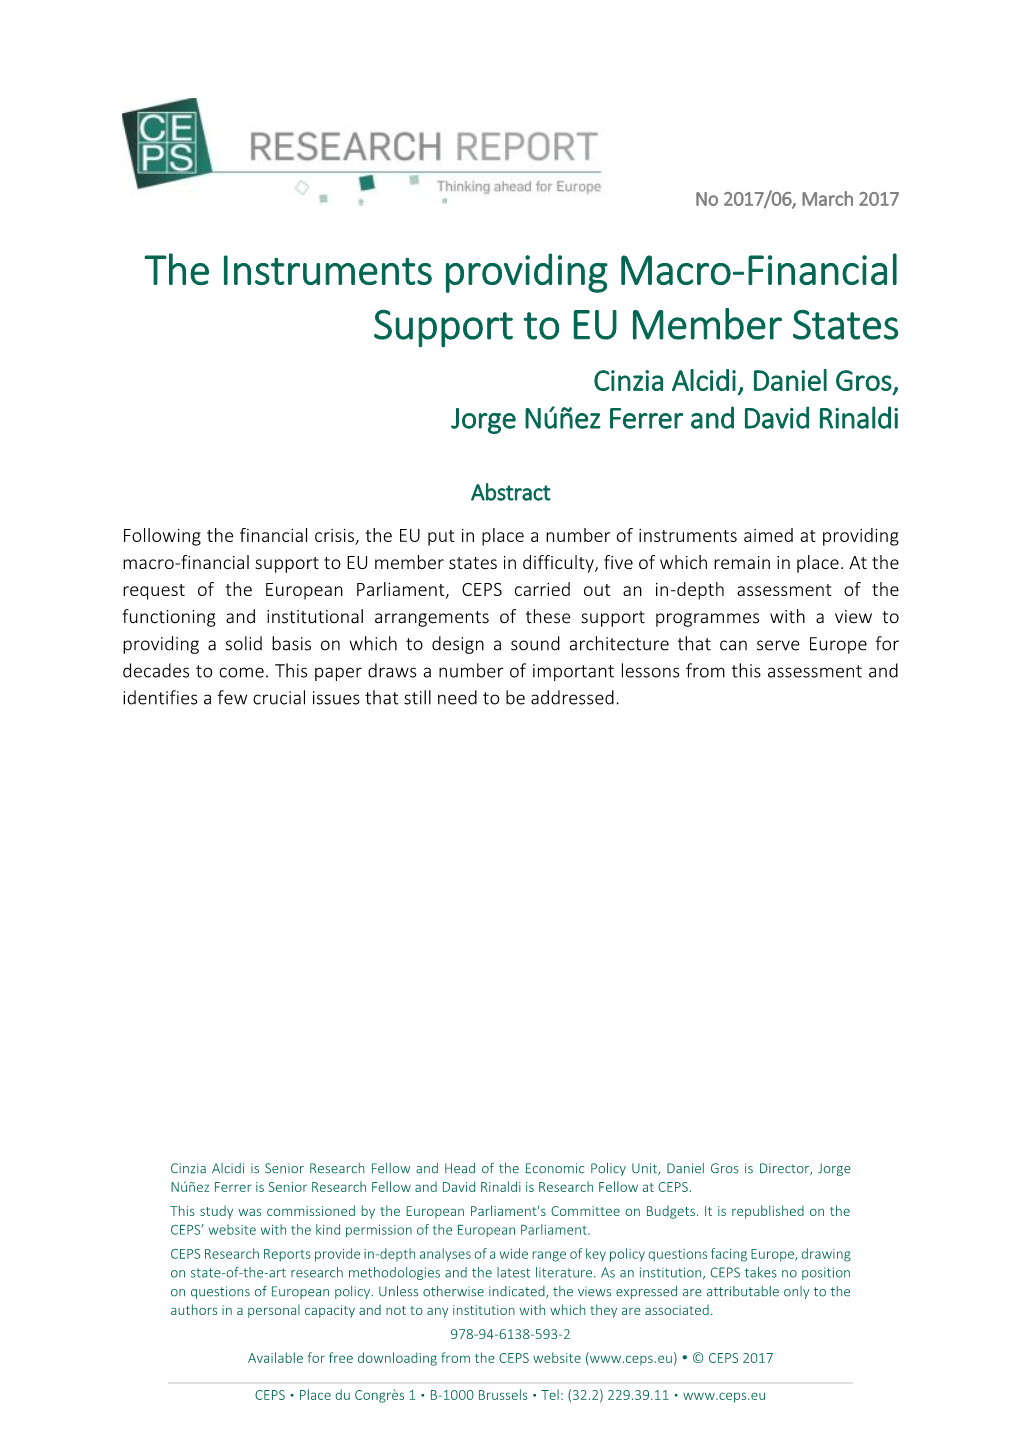 The Instruments Providing Macro-Financial Support to EU Member States Cinzia Alcidi, Daniel Gros, Jorge Núñez Ferrer and David Rinaldi